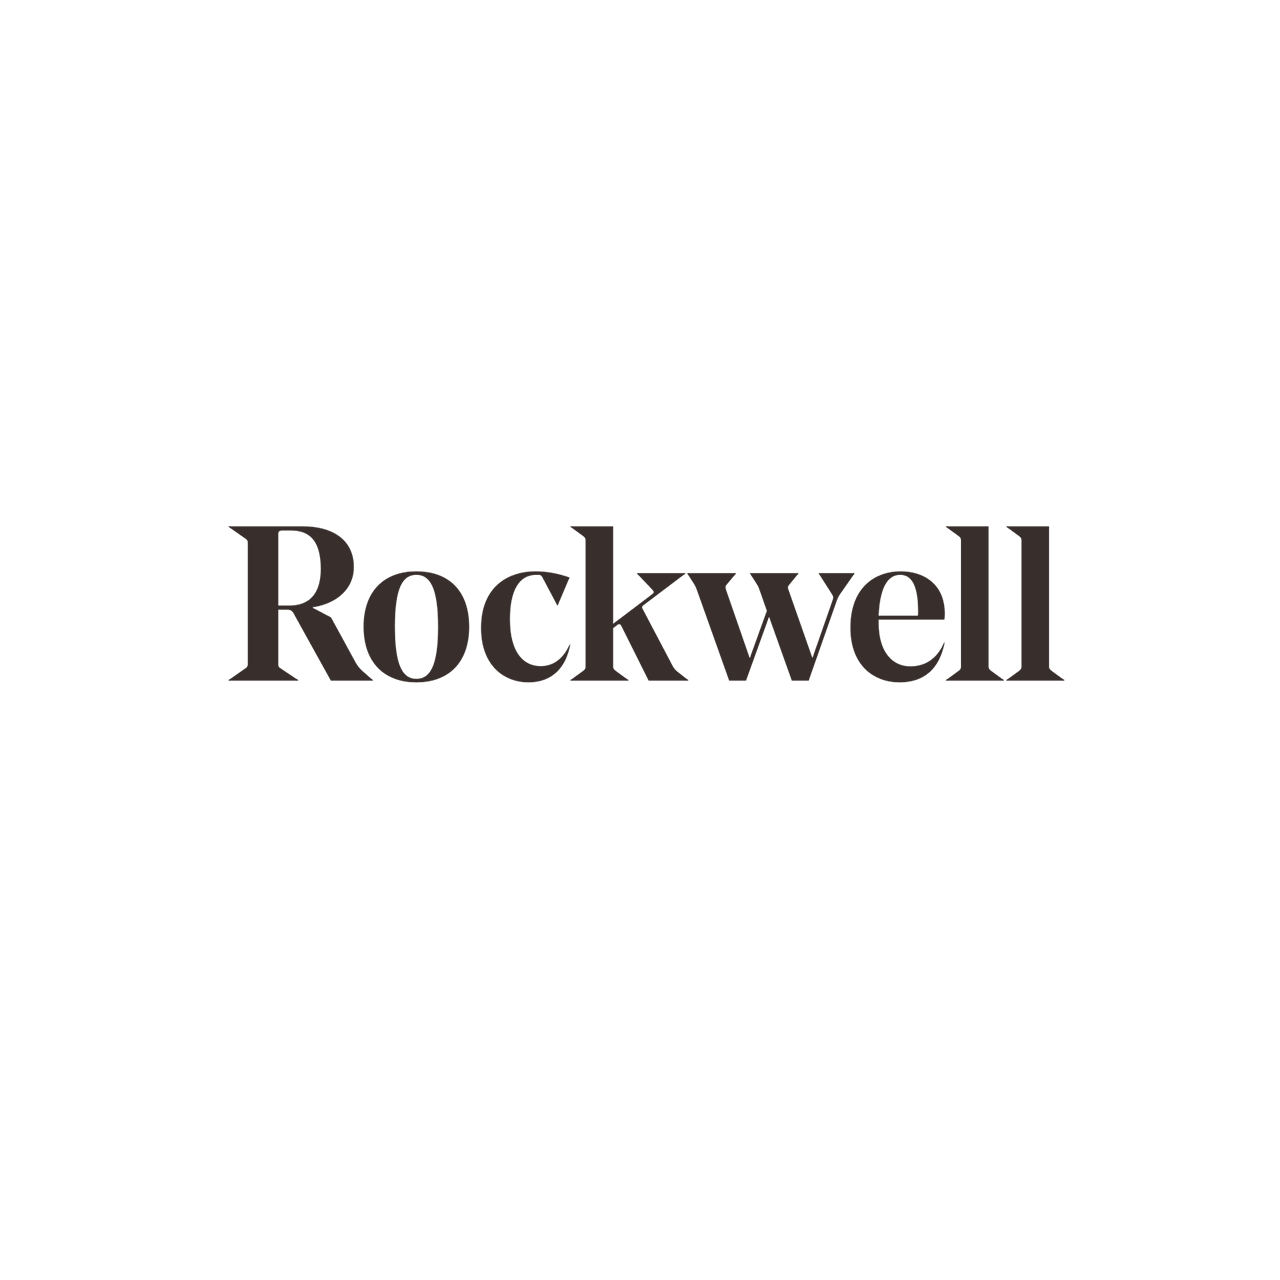 Rockwell_logo_Coffee_Pantone_412C sq